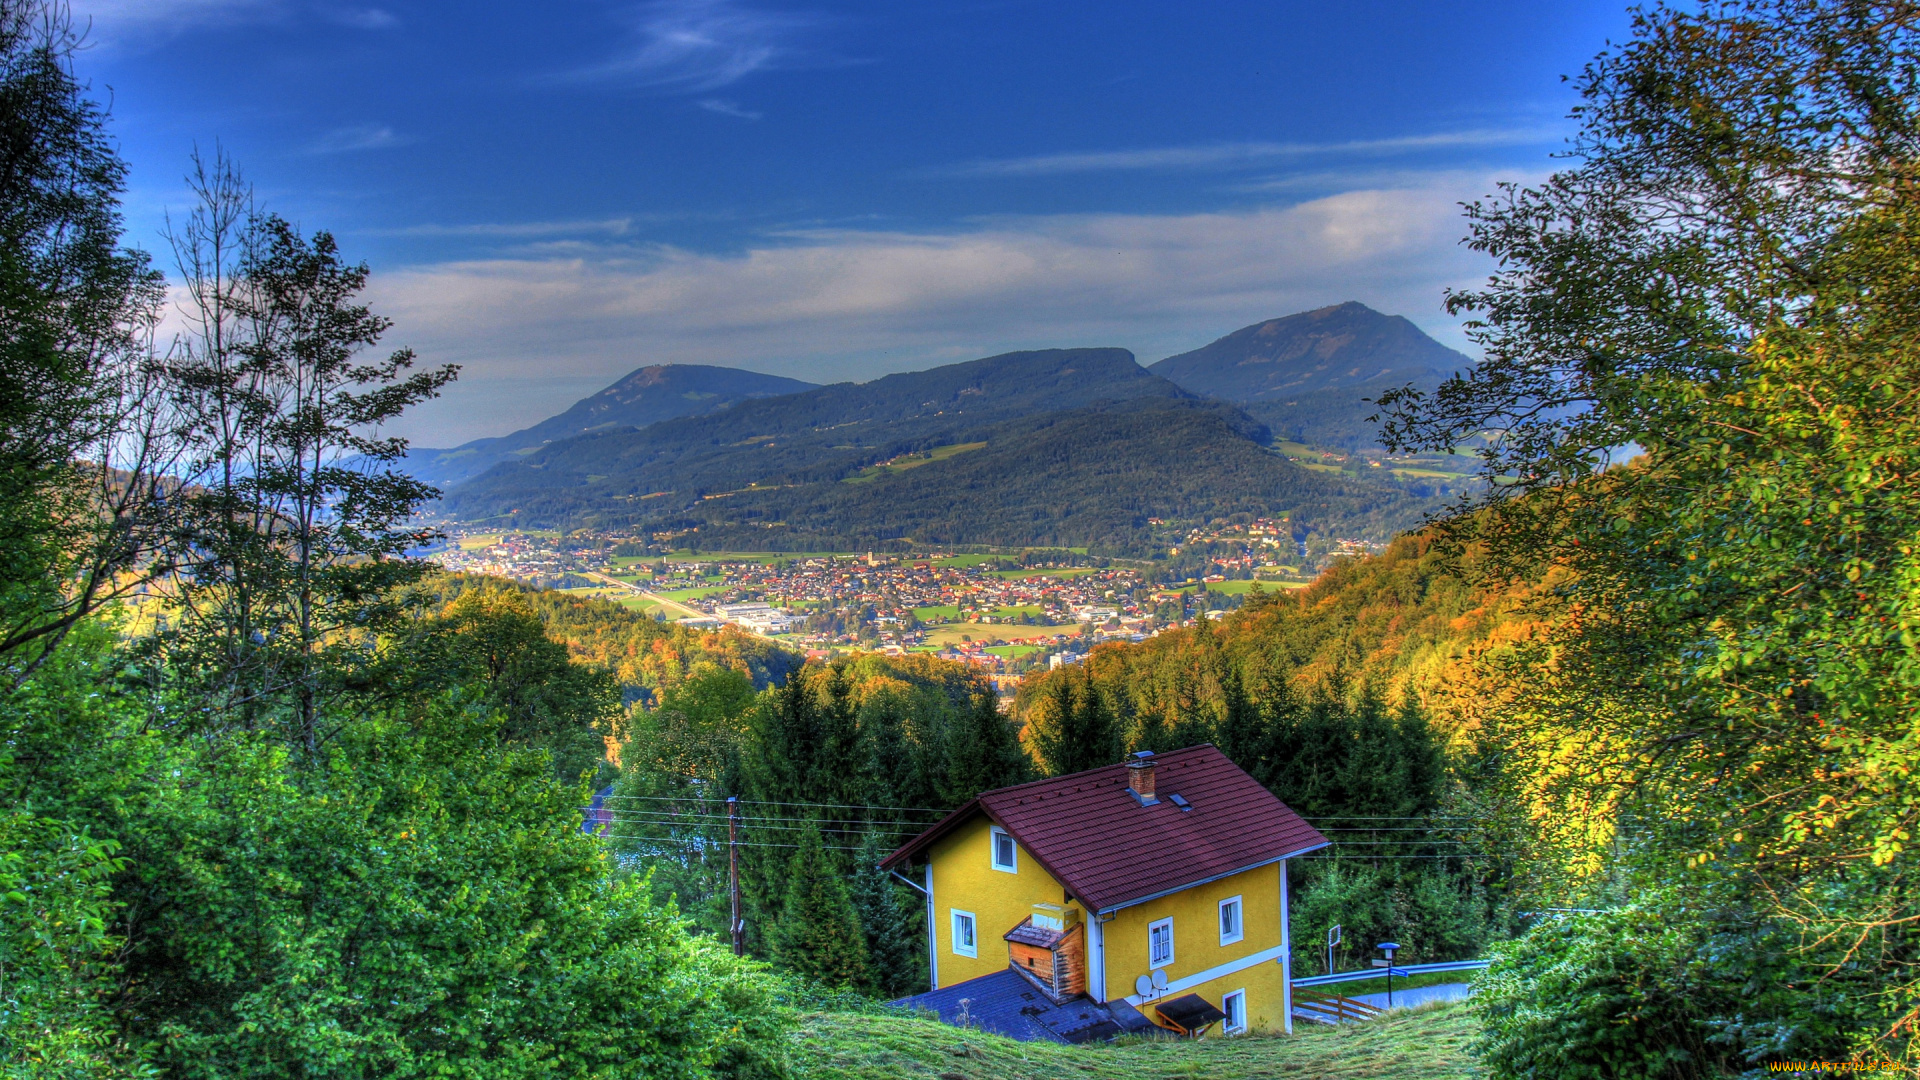 города, -, пейзажи, hdr, поля, горы, австрия, дома, панорама, hallein, солнце, небо, осень, леса